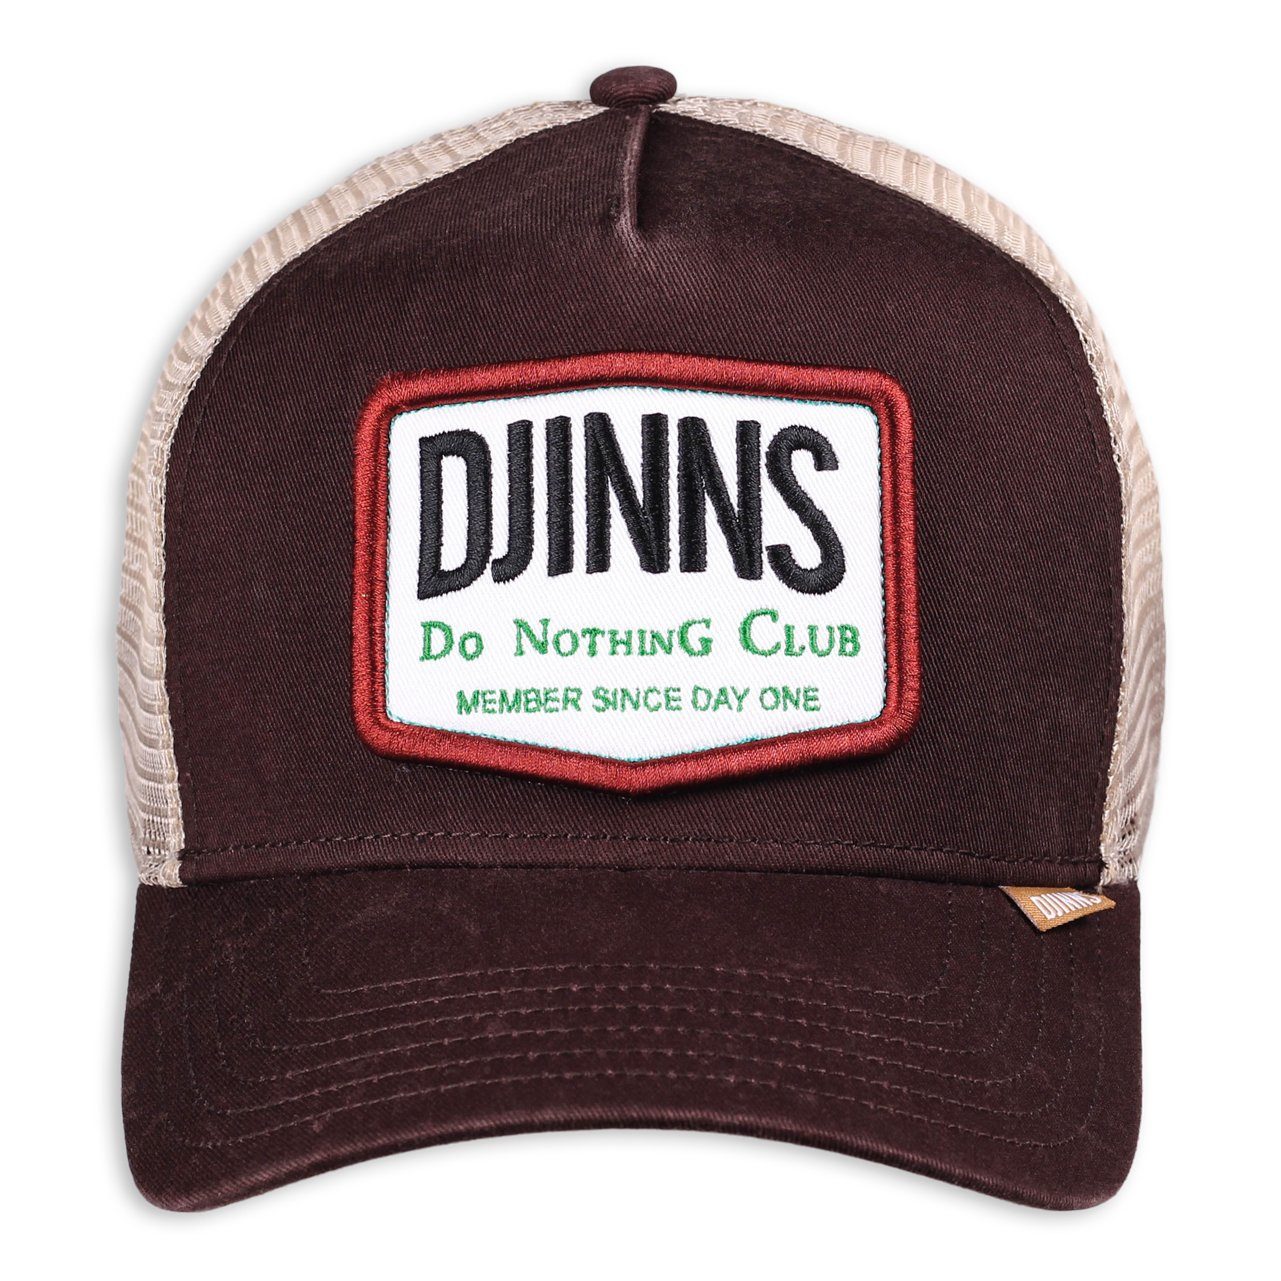 Djinns Trucker Cap Cap dunkelbraun Brown HFT Nothing HeatDye Club #2 Dark - Trucker Cap